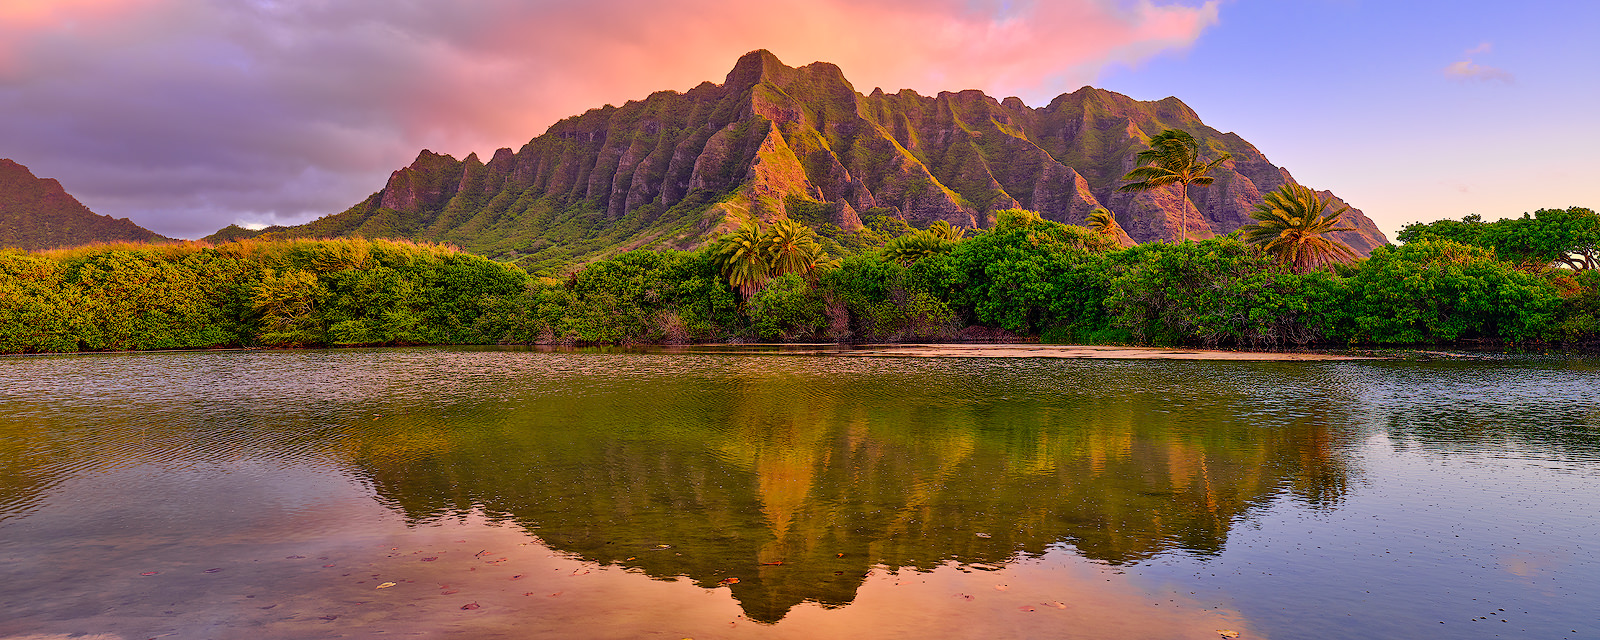 sunrise panorama photograph of kualoa mountains on the hawaiian island of Oahu.  Fine art panoramic photography by Hawaii artist Andrew Shoemaker